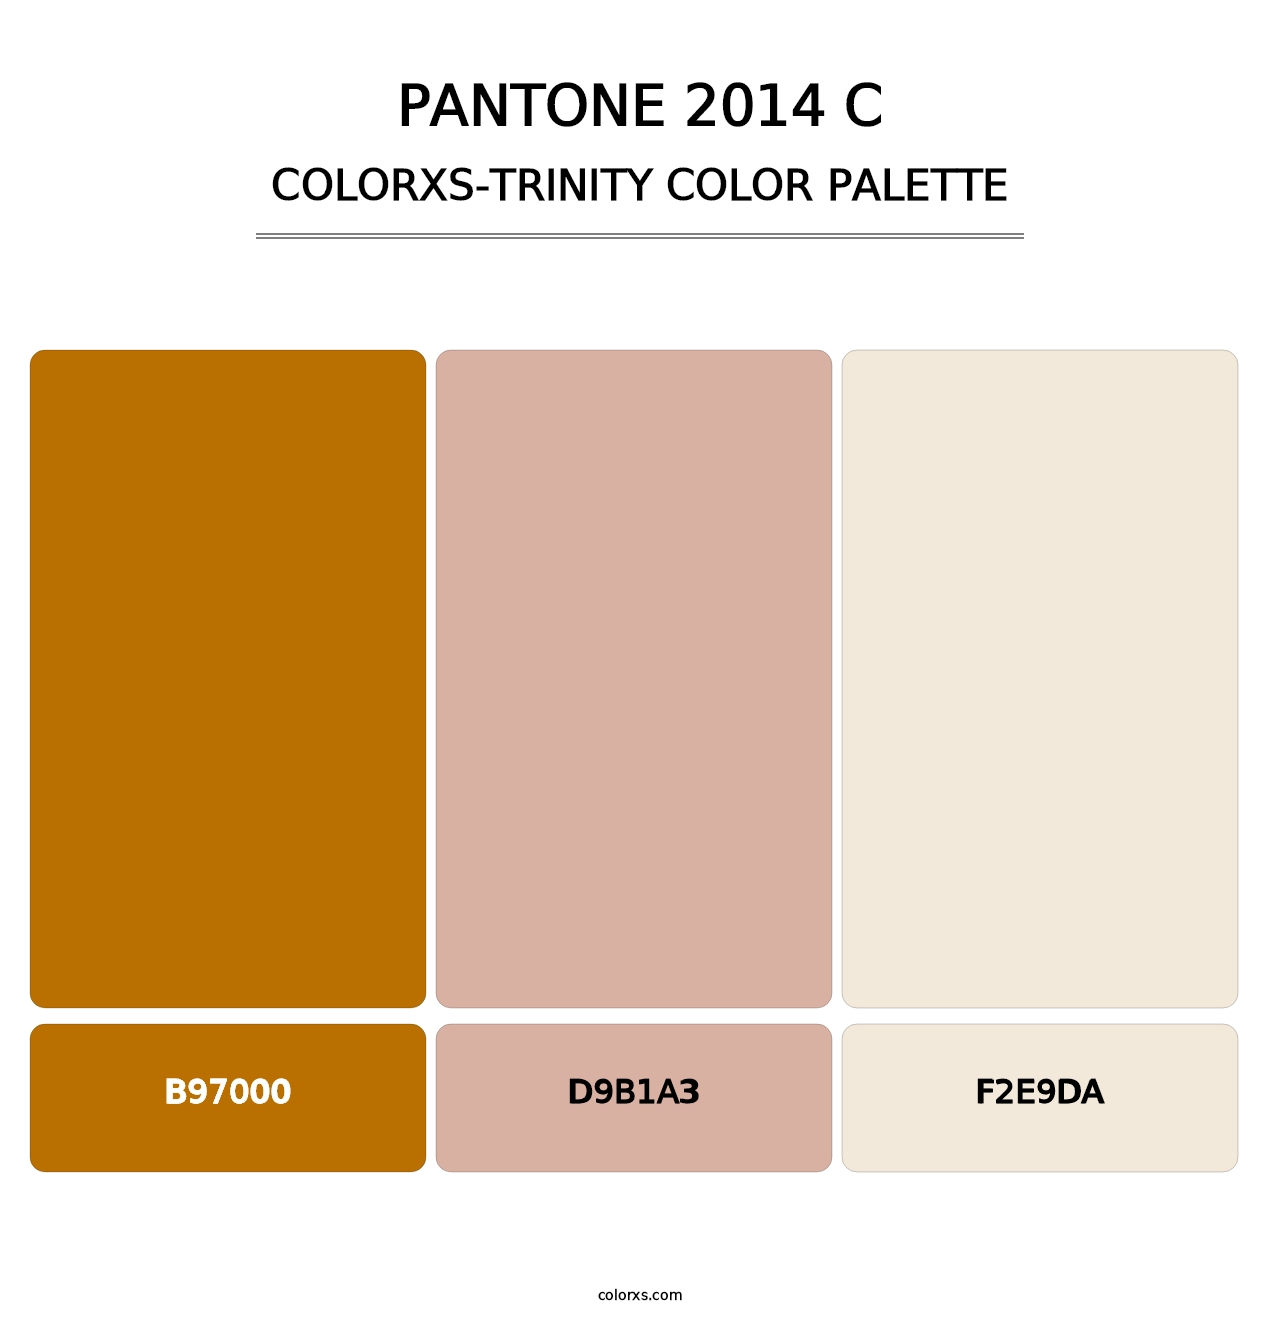 PANTONE 2014 C - Colorxs Trinity Palette